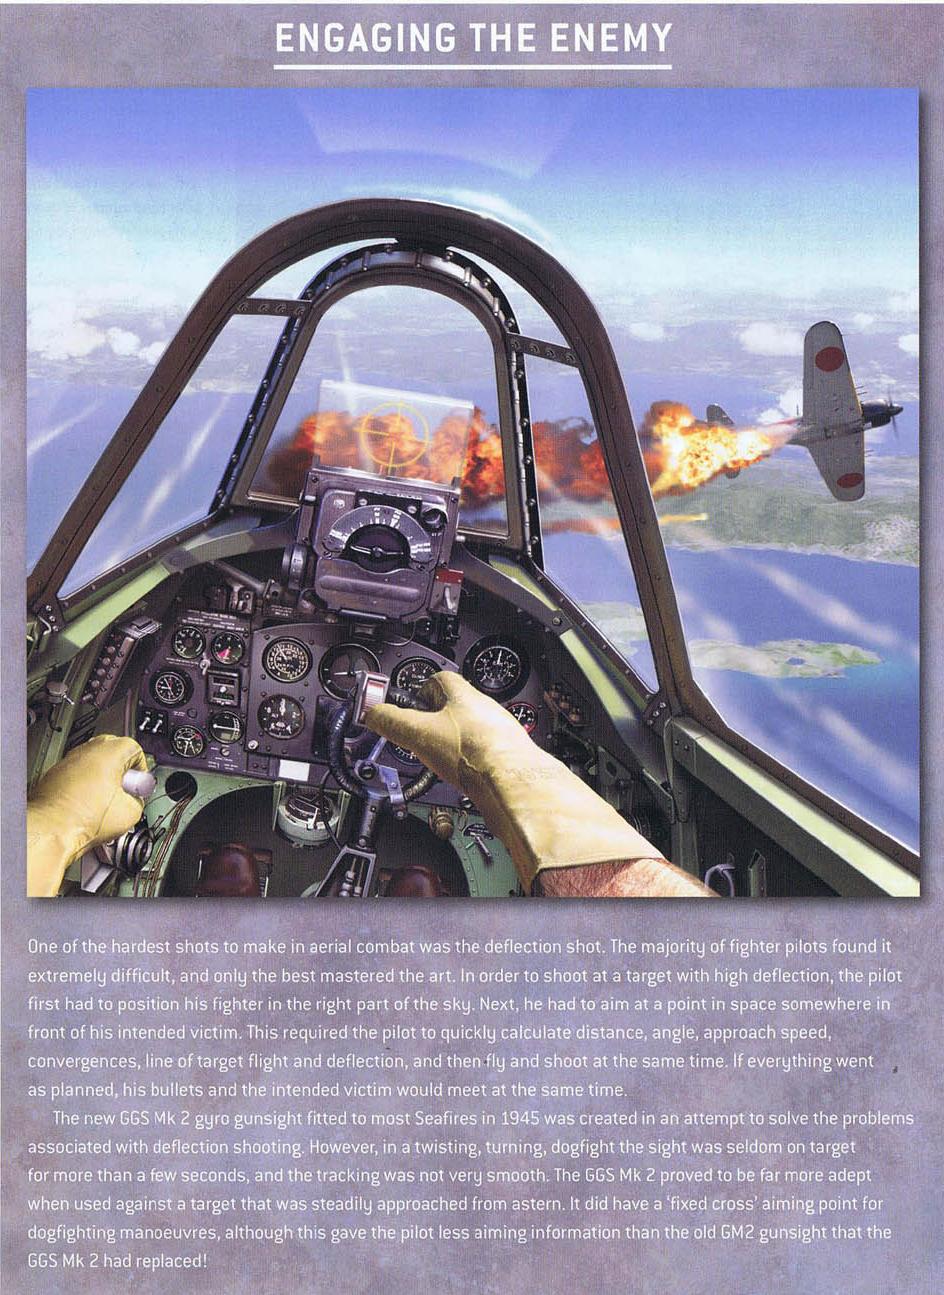 Seafire против A6M Zero на Тихоокеанском ТВД (Donald Nijboer "Seafire vs A6M Zero Pacific Theatre") Скачать